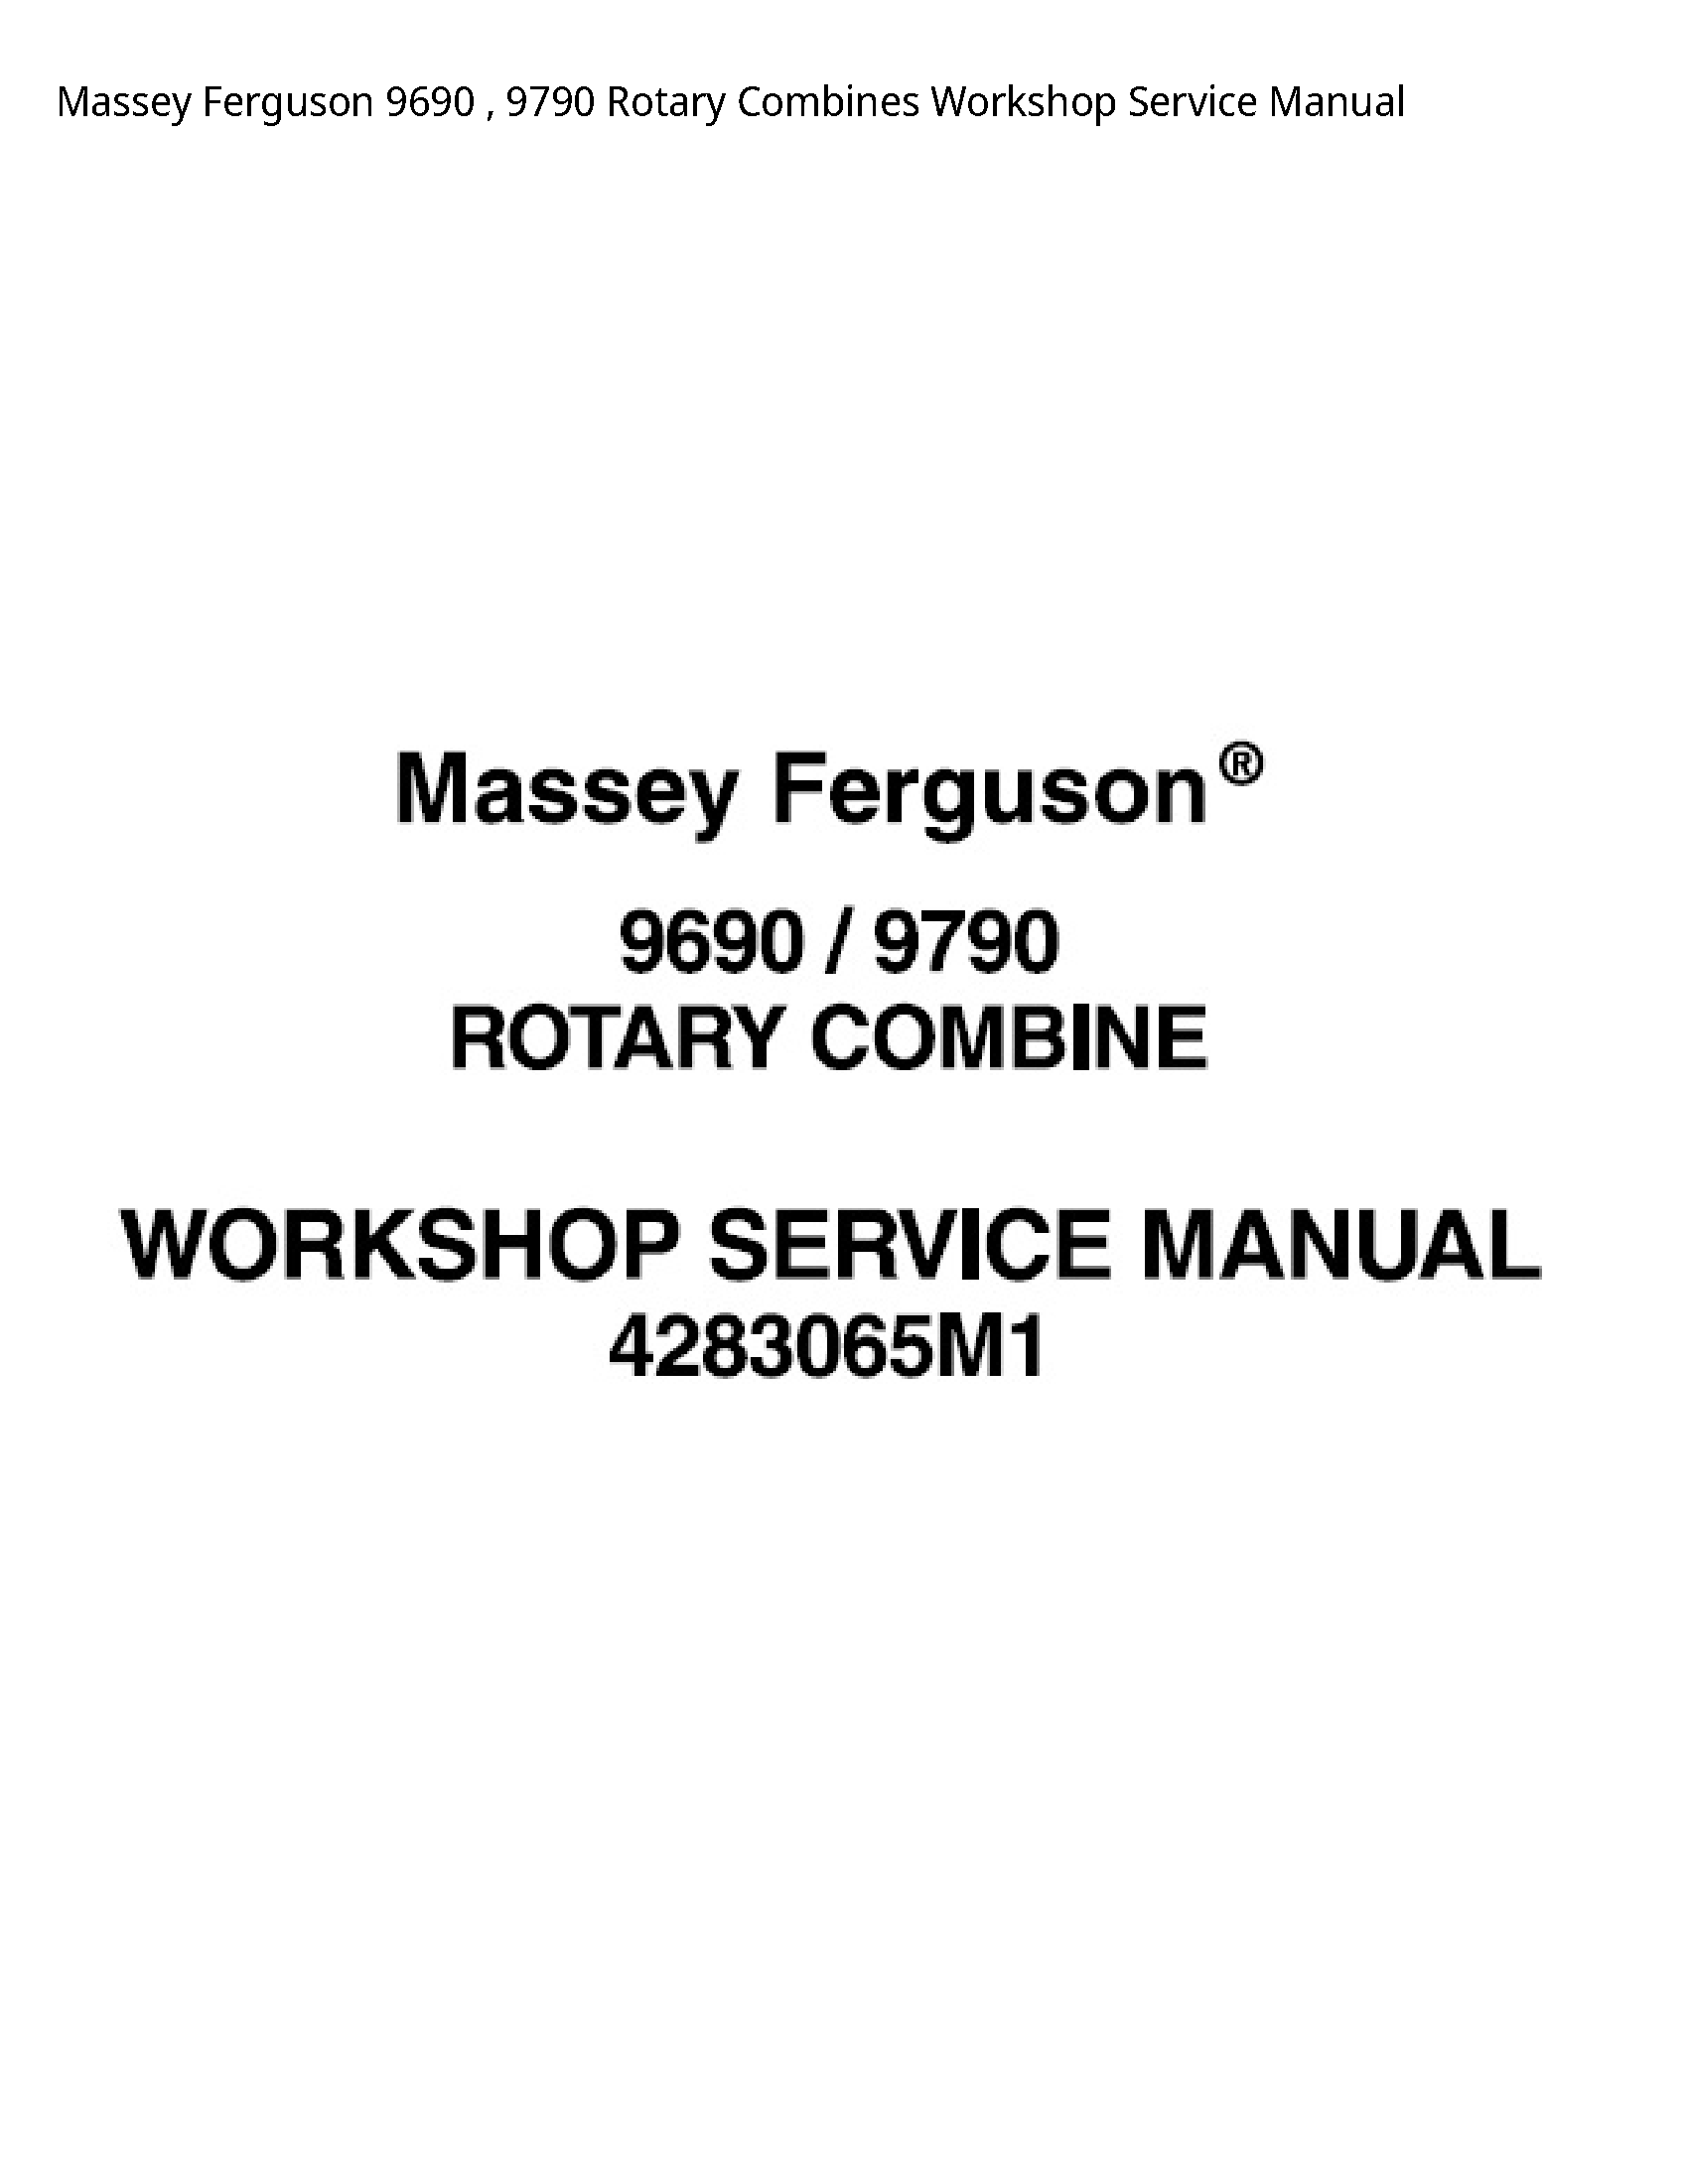 Massey Ferguson 9690 Rotary Combines Service manual